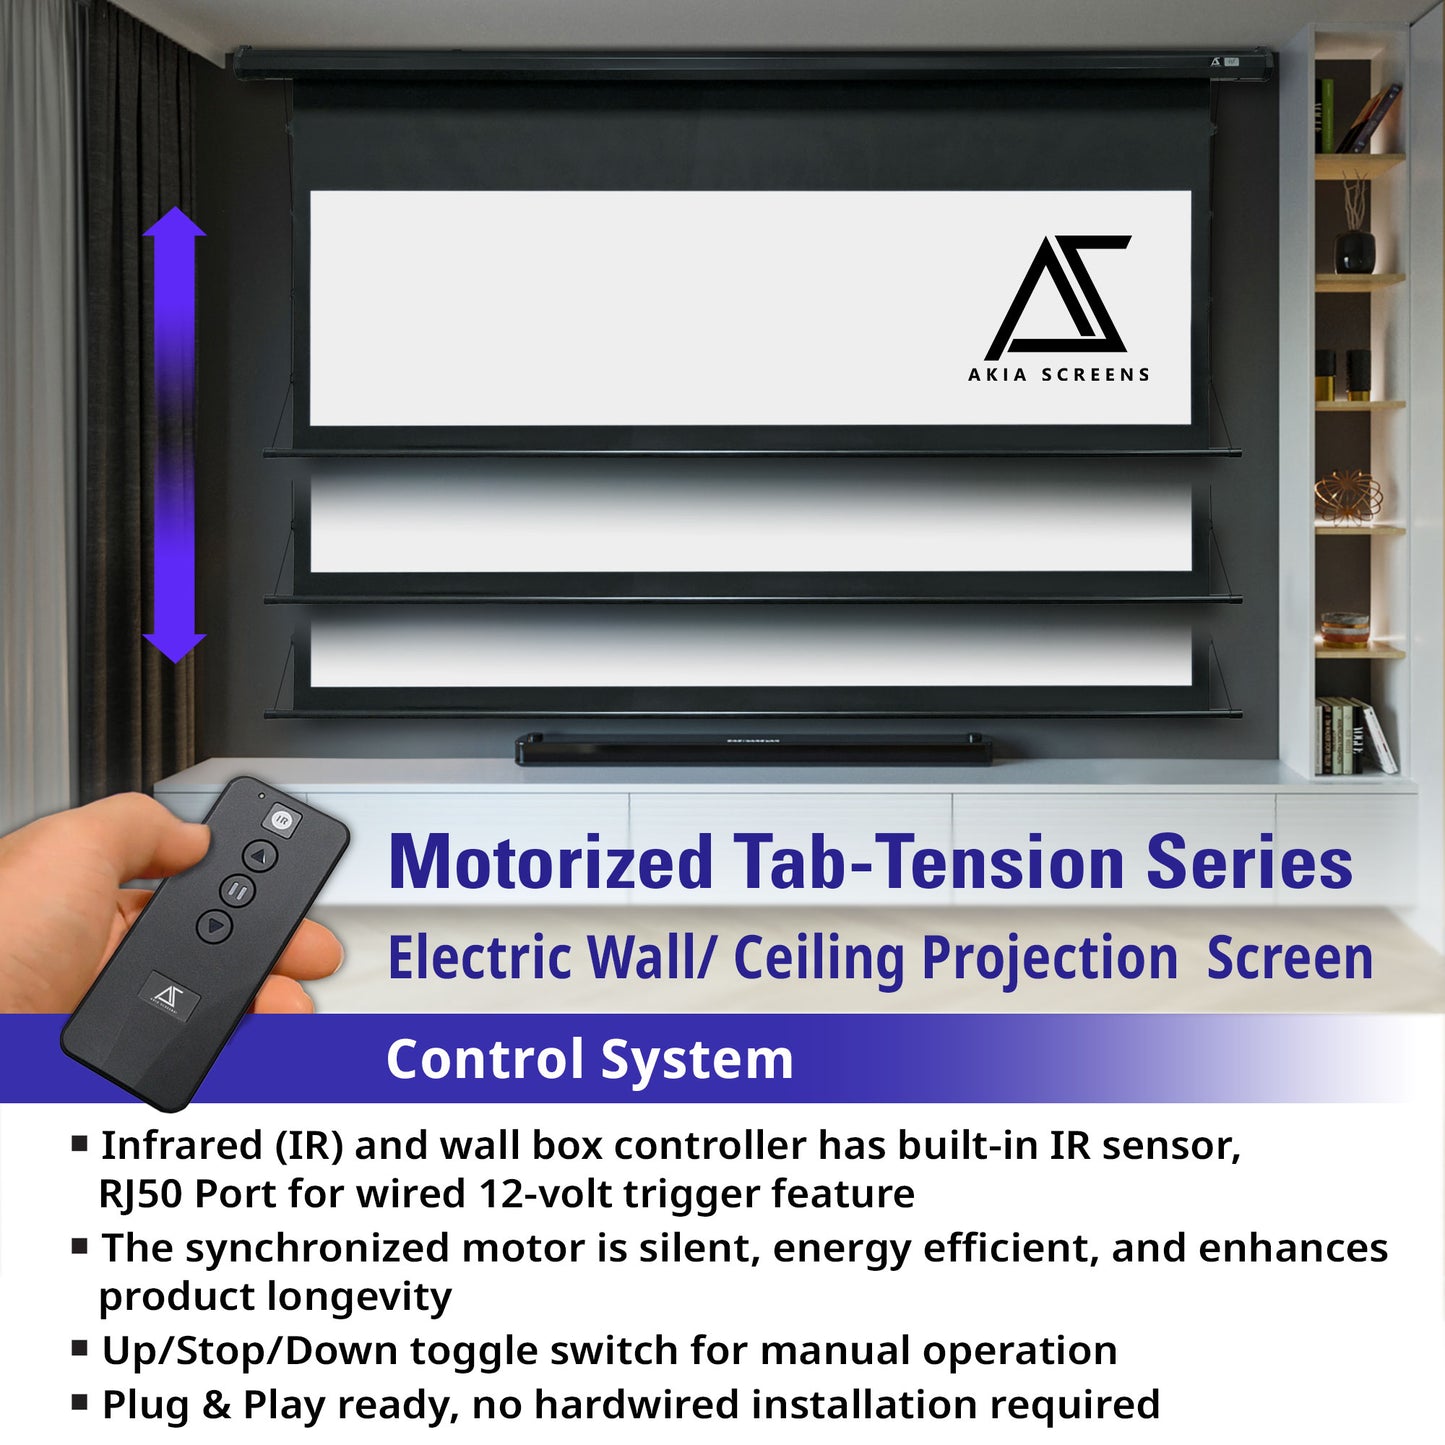 Motorized Tab-Tension Series